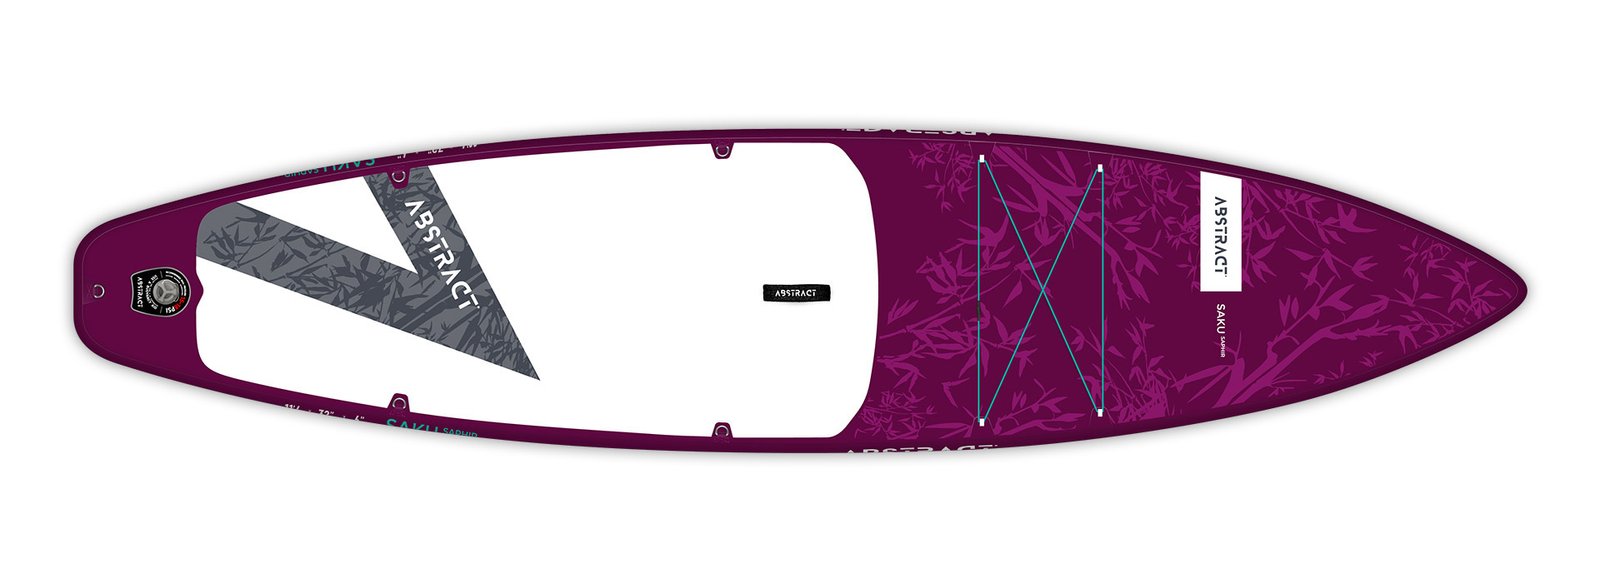 Inflatable paddle Board gonflable Saku Saphir (violet) Abstract 2021